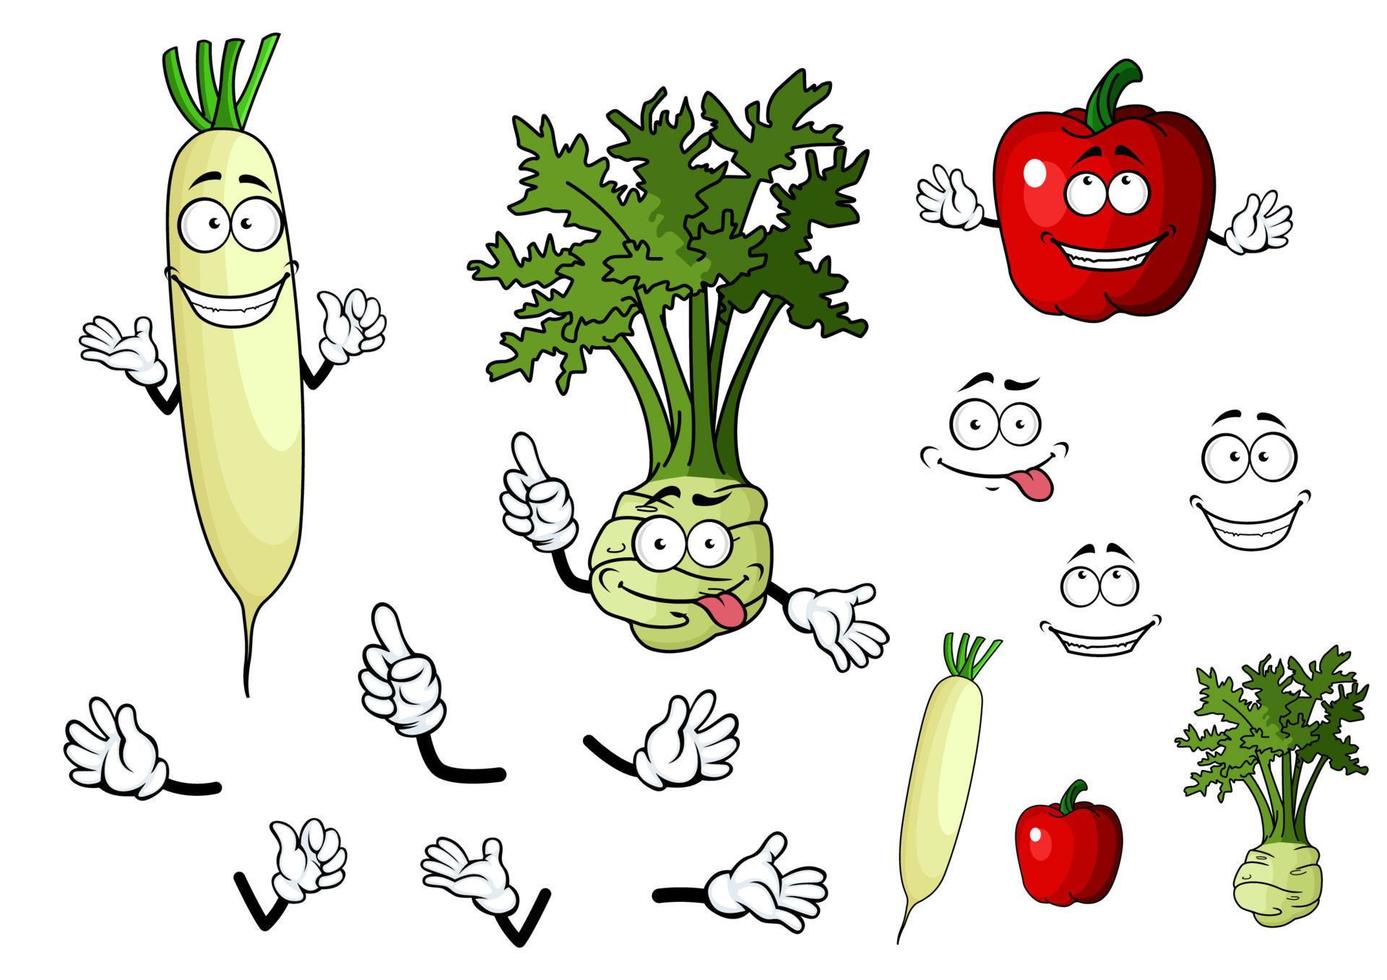 Turnip, radish and pepper vegetables vector